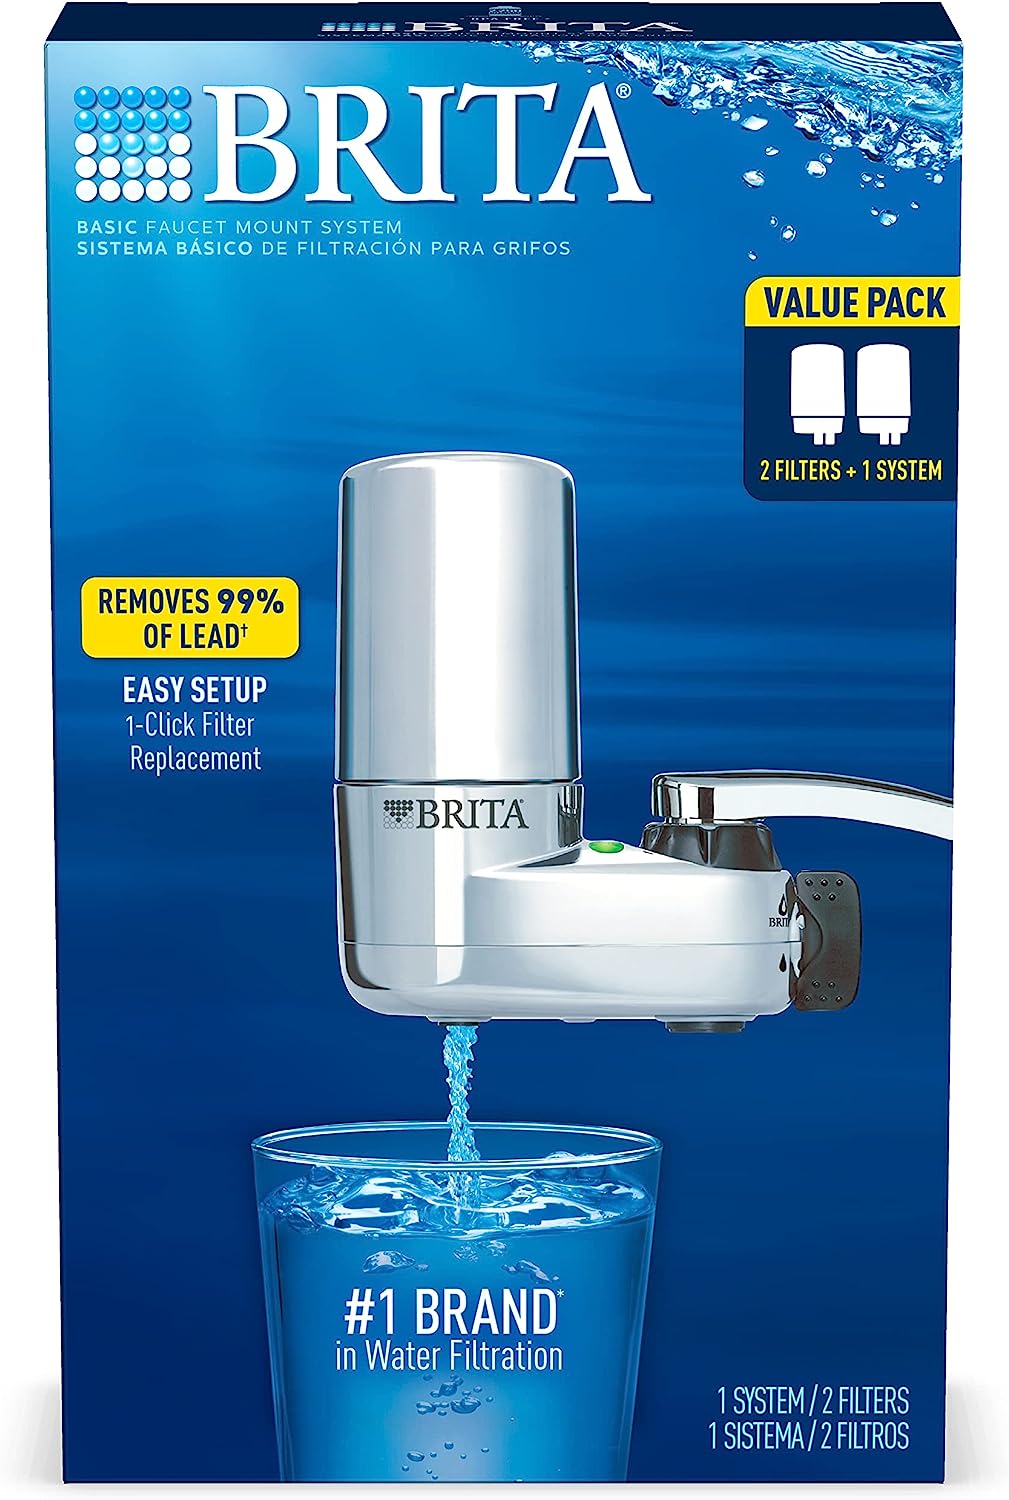 Brita Water Filter for Sink, Faucet Mount Water [...]